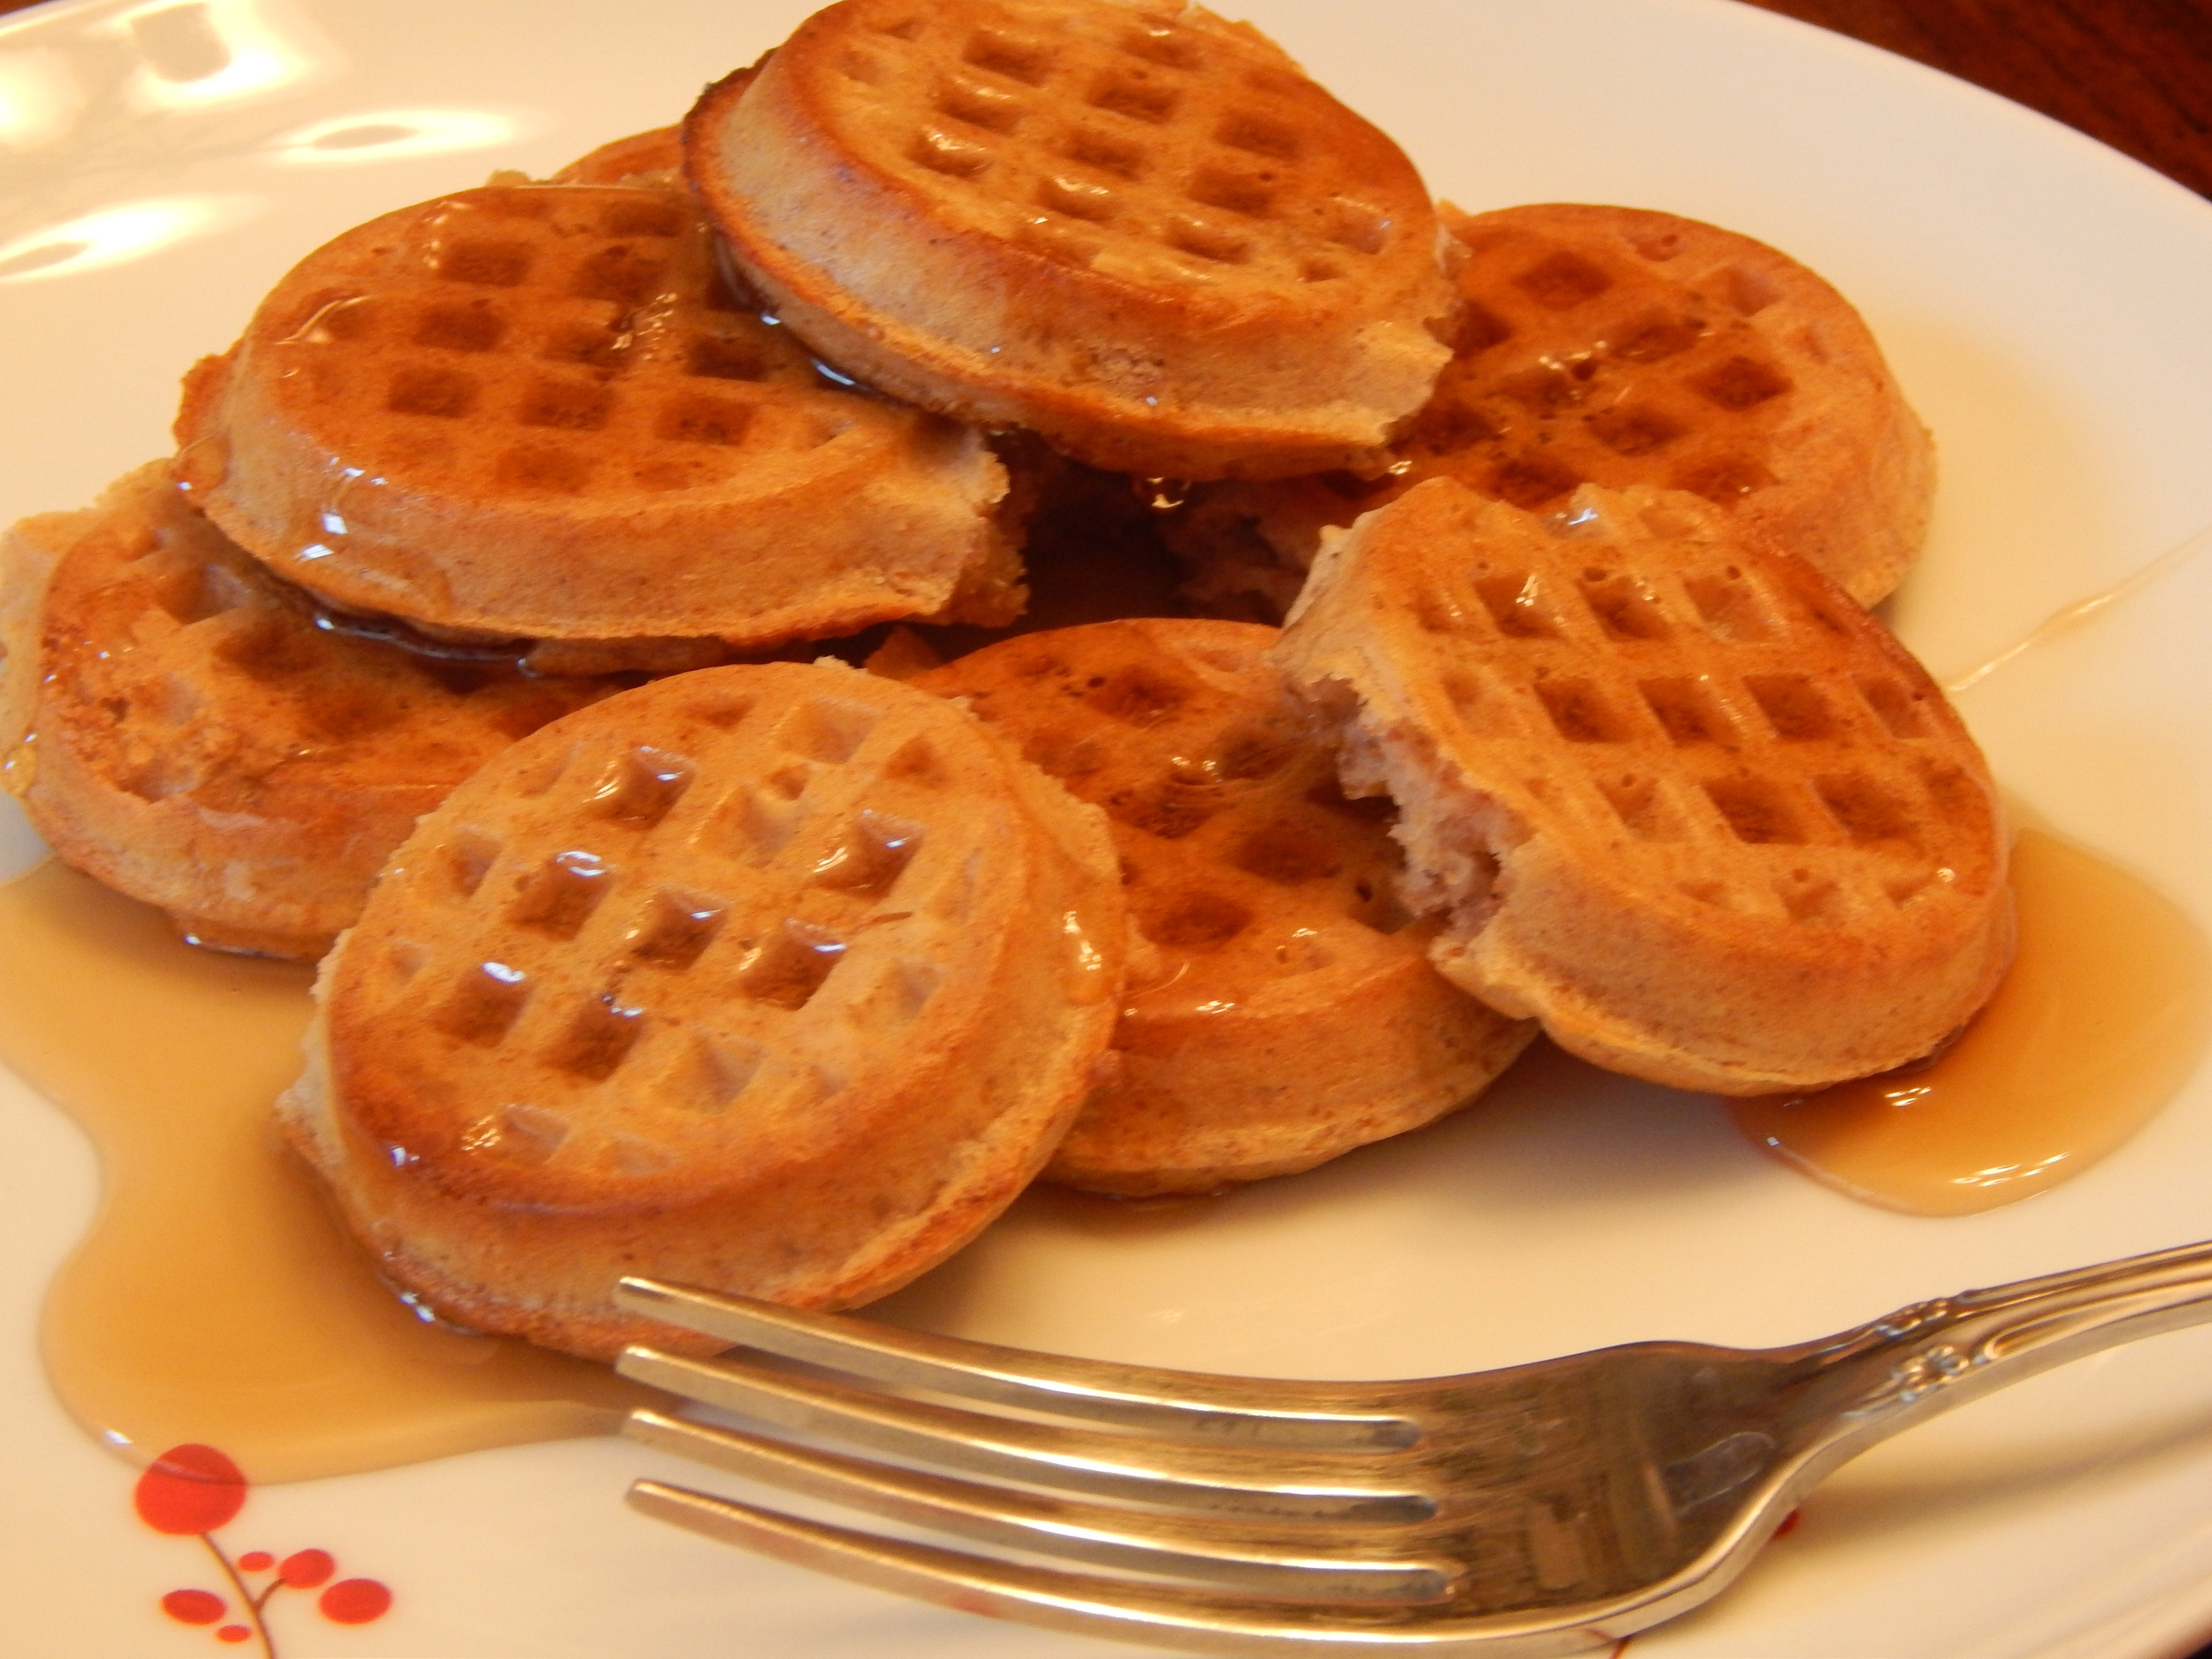 https://vegcharlotte.files.wordpress.com/2014/02/365-mini-waffles-3.jpg